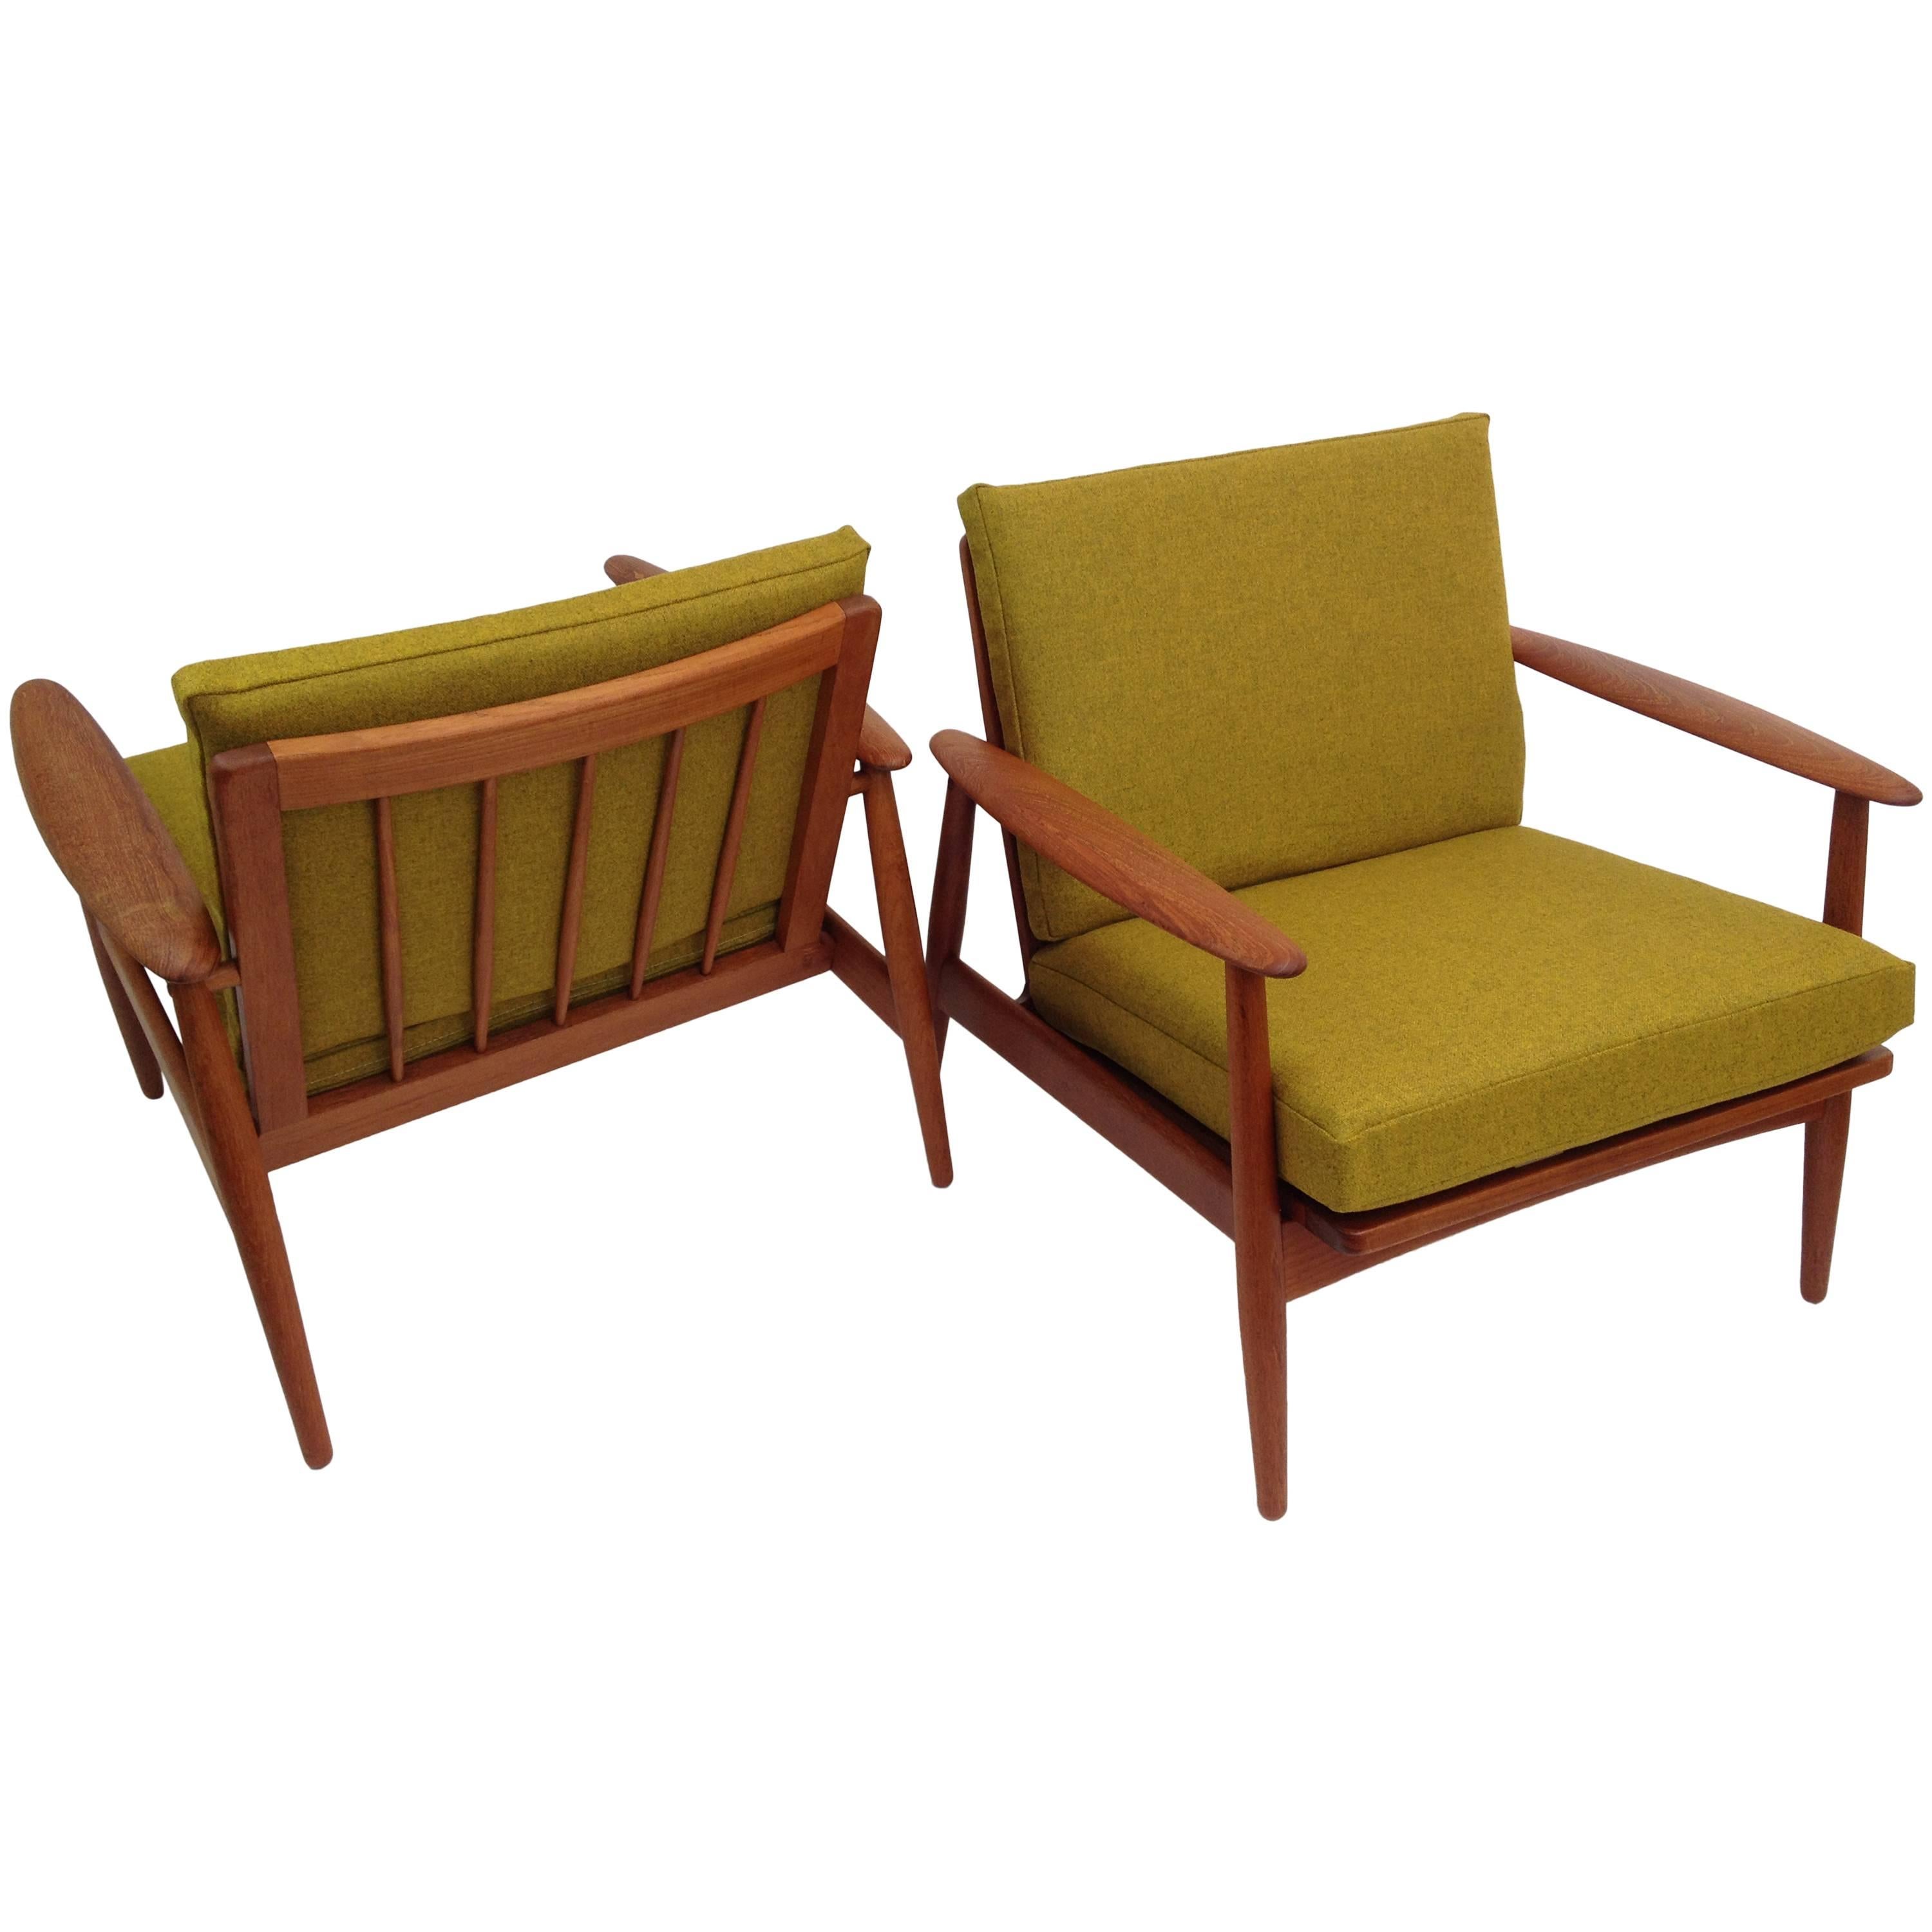 Spectacular Pair of 1960s Danish Modern Teak Easy Chairs, Made in Denmark For Sale